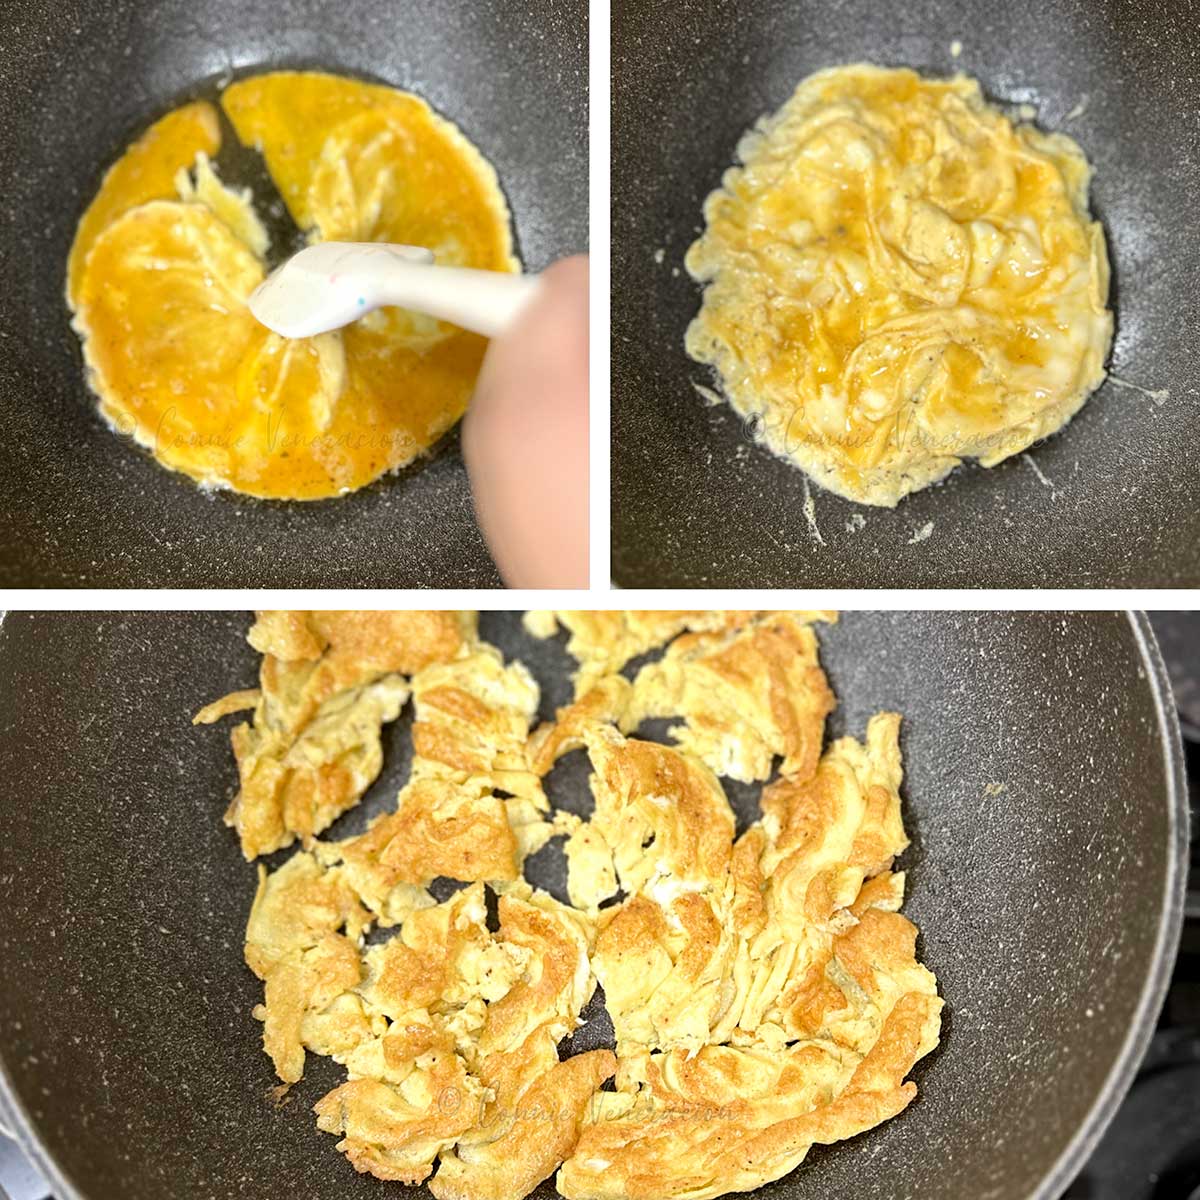 Frying scrambled eggs